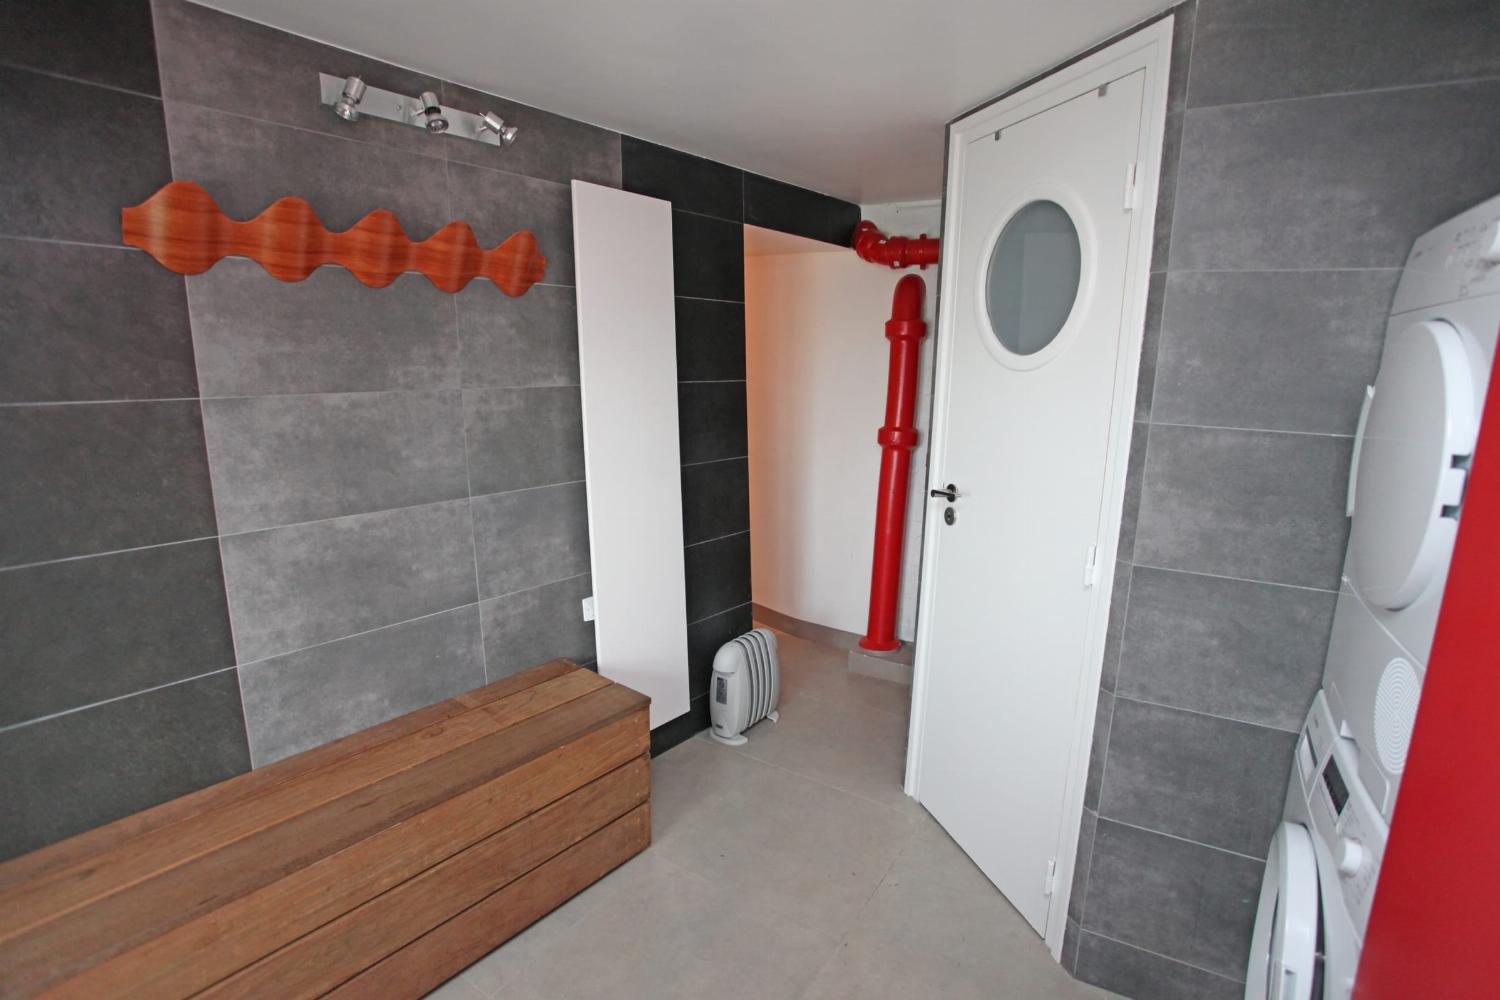 Utilty room | Rental home in Brittany